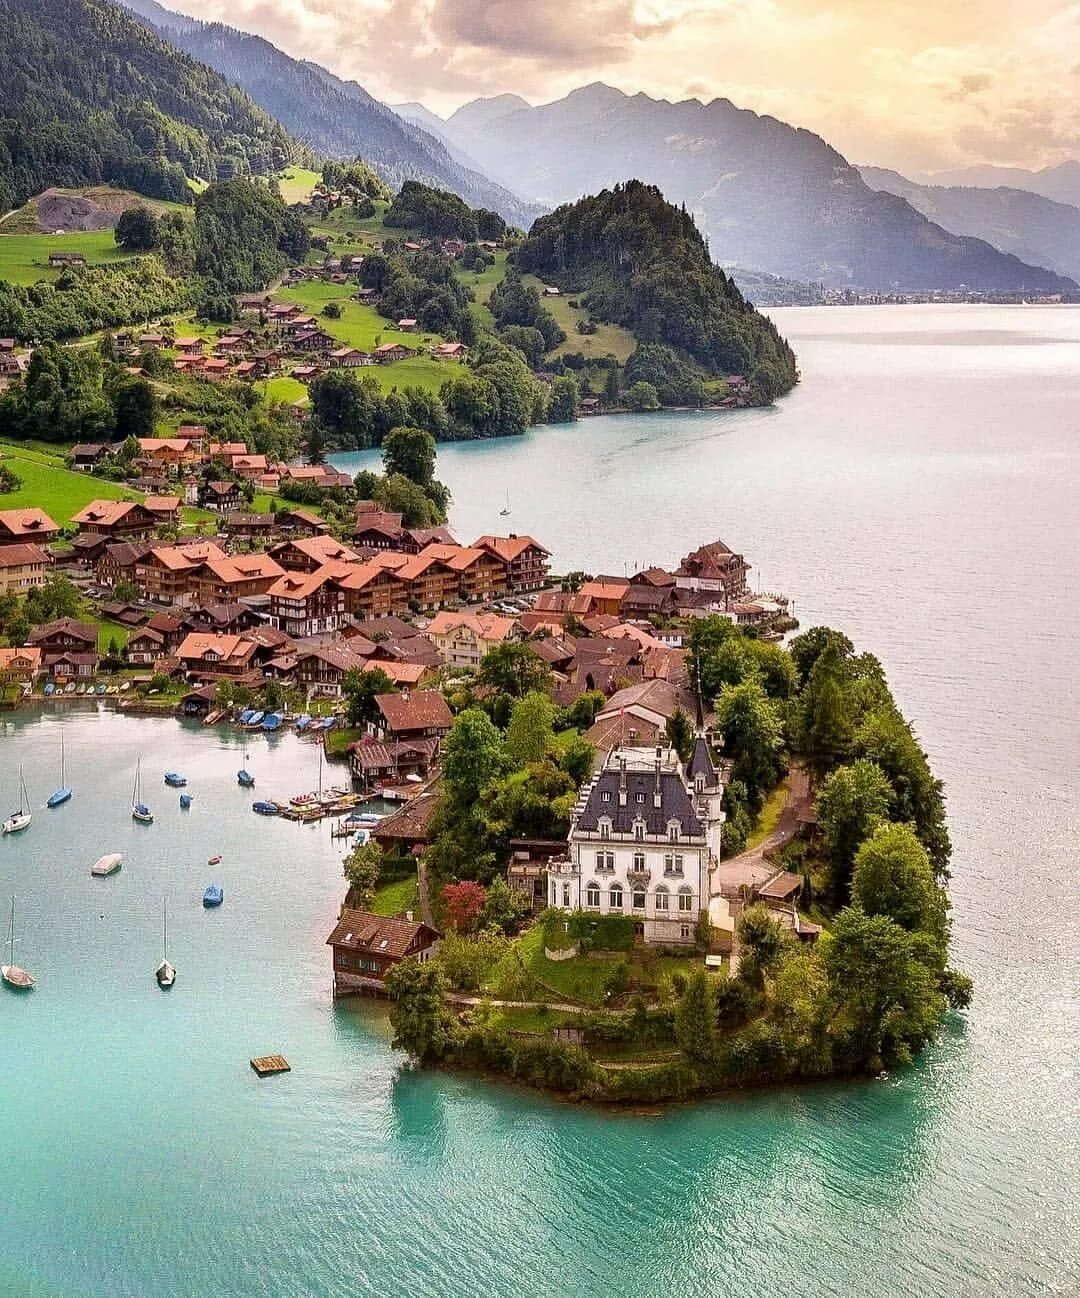 Бриенц Швейцария. Бриенцское озеро Швейцария. Замок Изельтвальд озеро Бриенц Швейцария. Деревня Бриенц Швейцария.